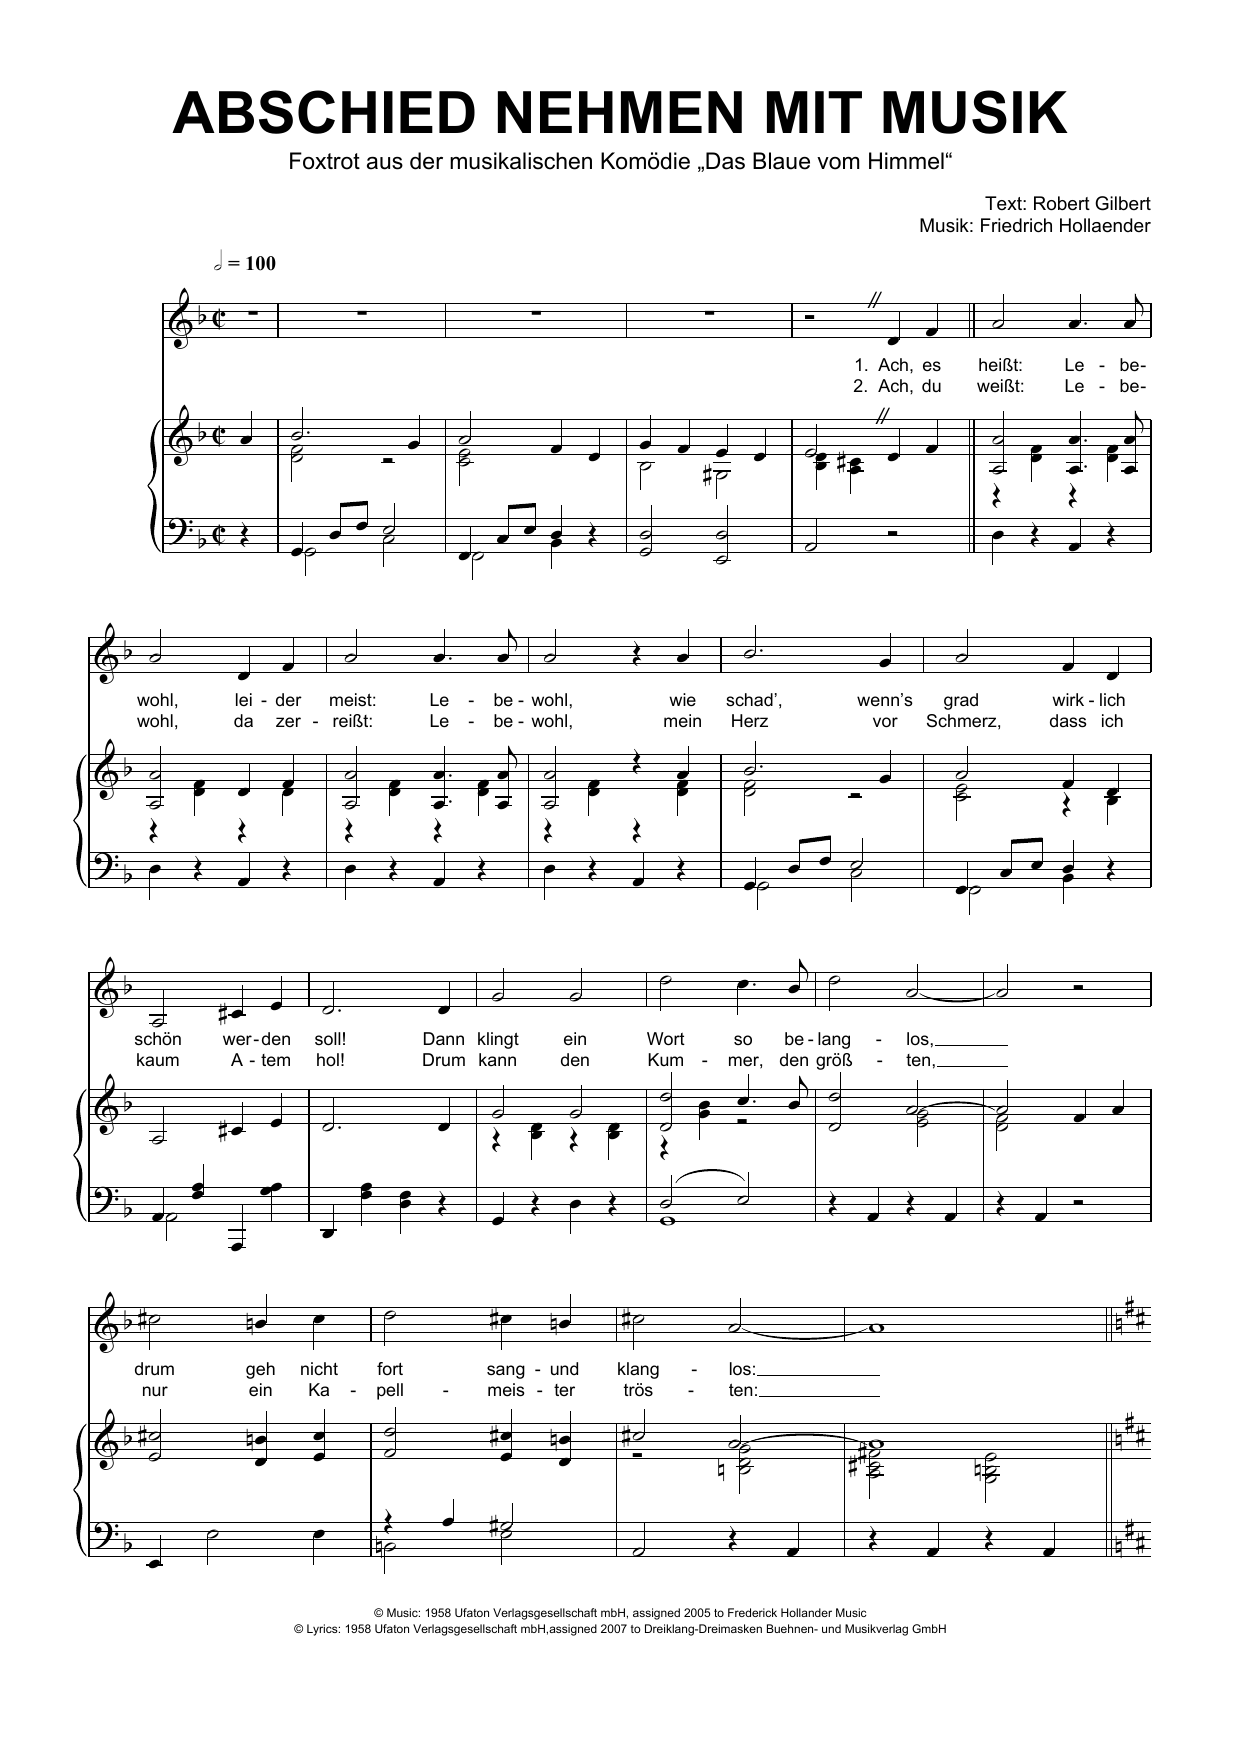 Friedrich Hollaender Abschiednehmen Mit Musik Sheet Music Notes & Chords for Piano & Vocal - Download or Print PDF